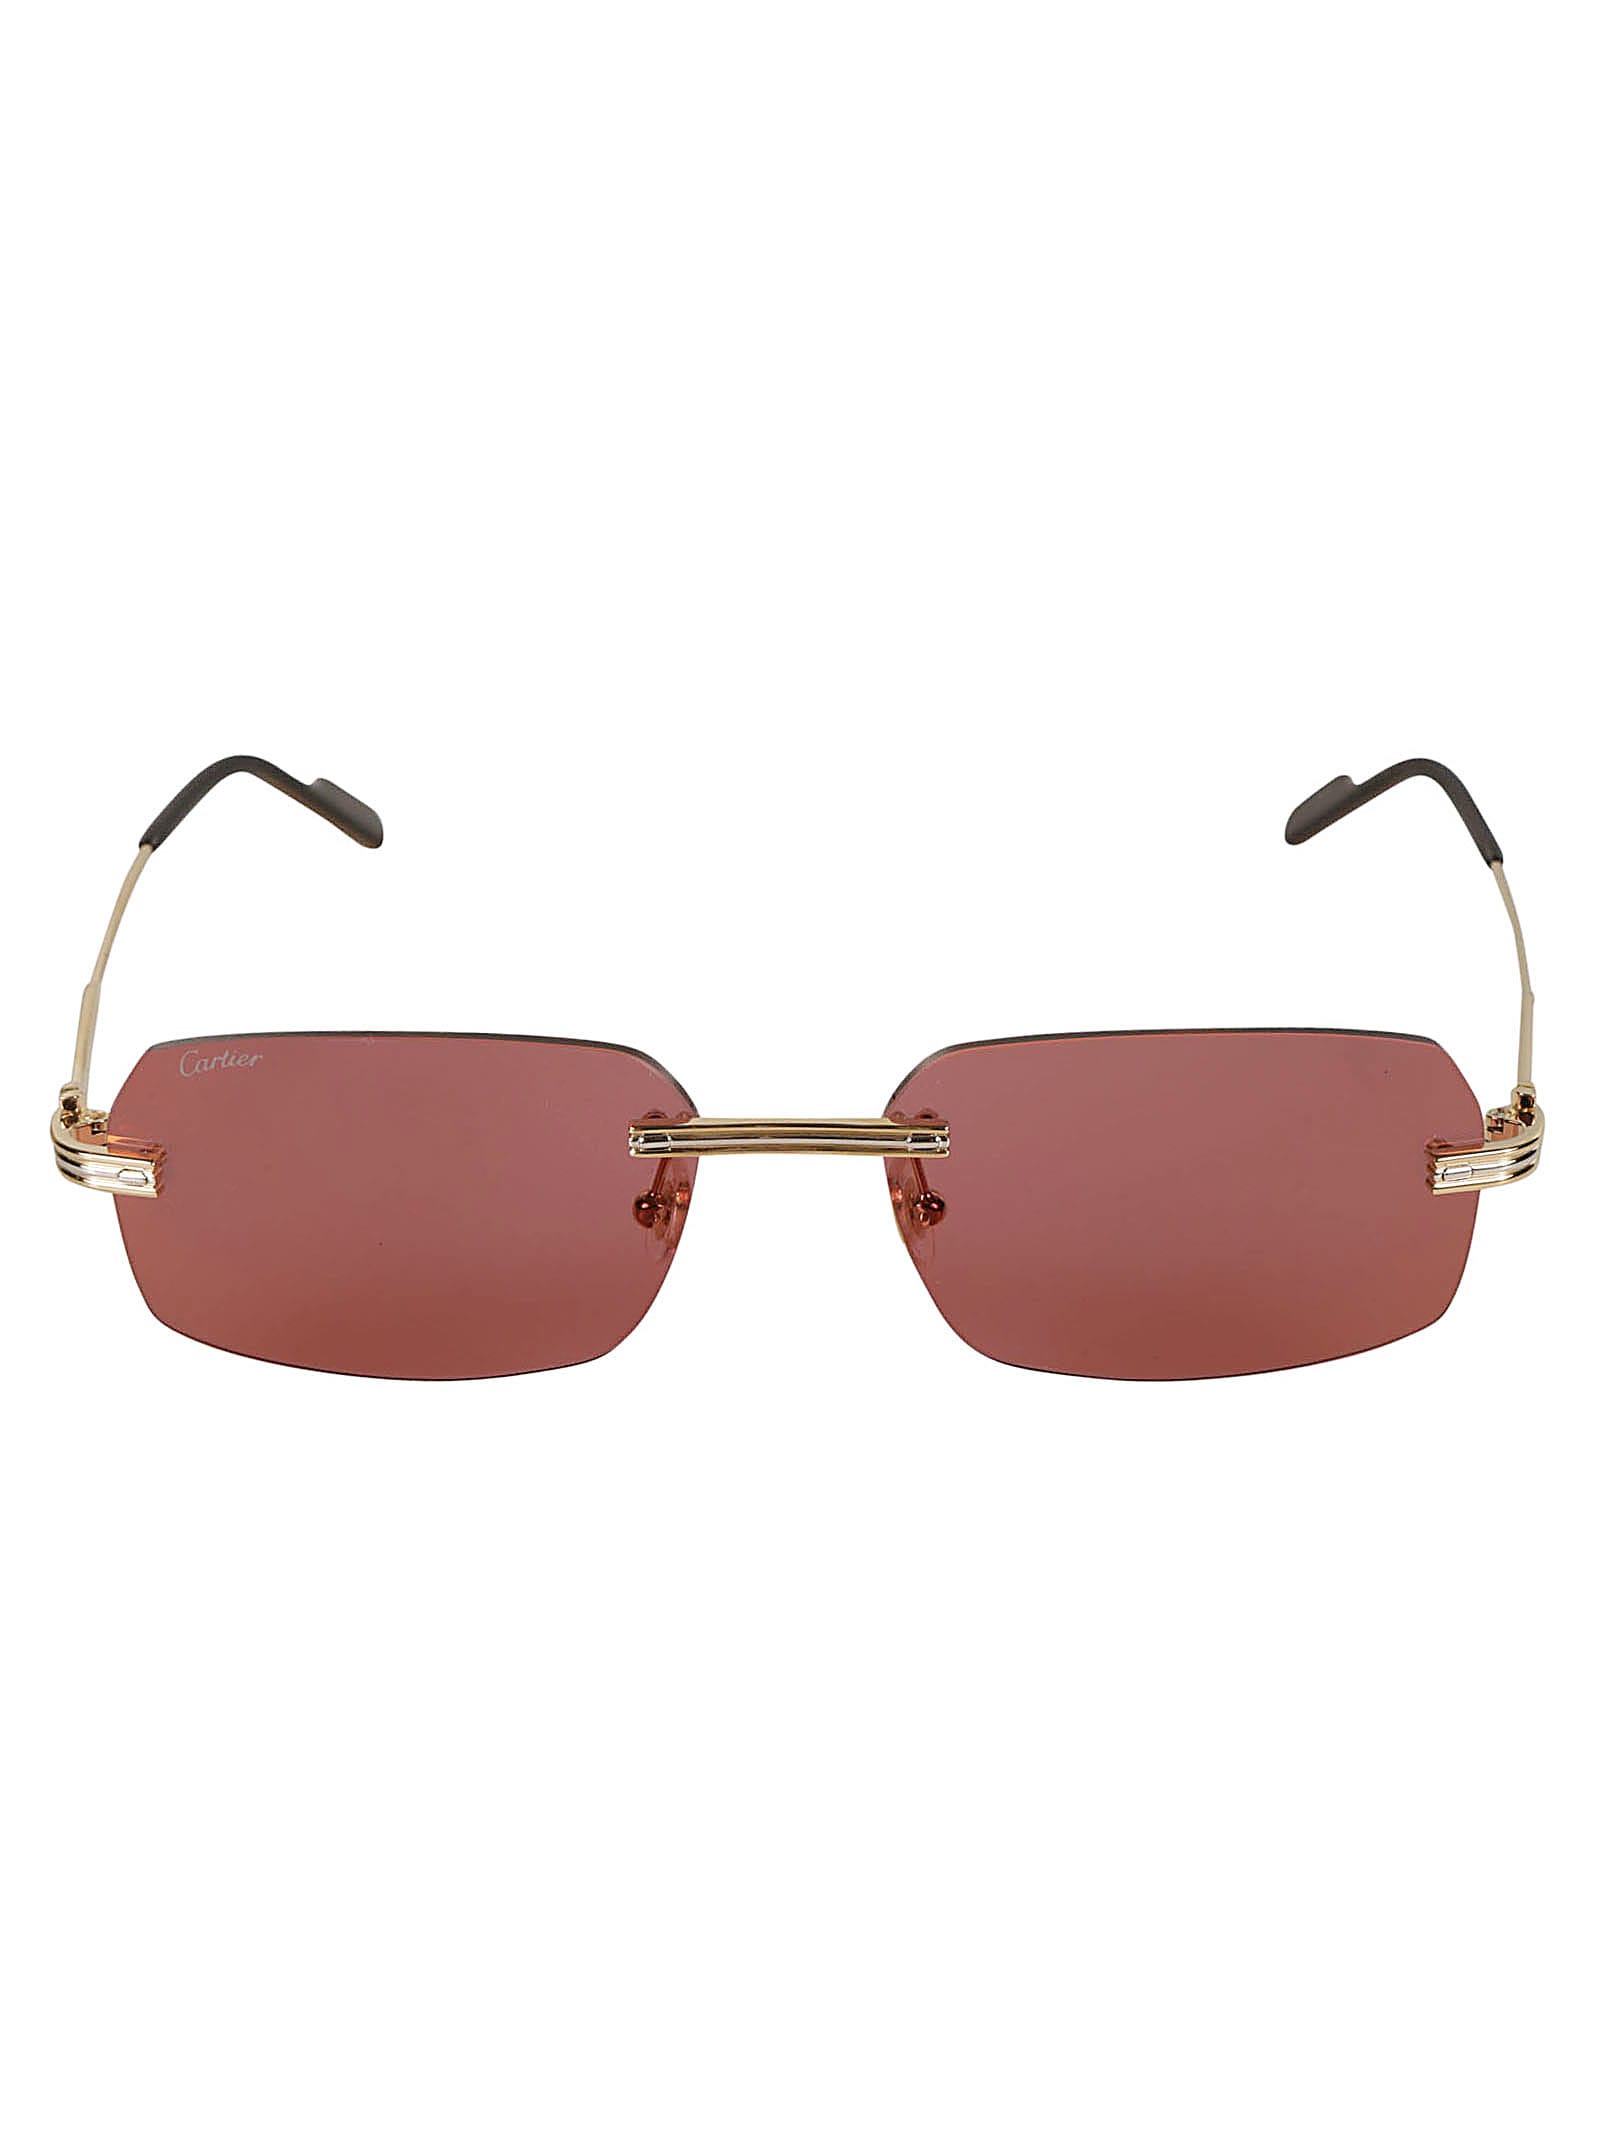 Cartier Rectangular Sunglasses Sunglasses In Gold/red